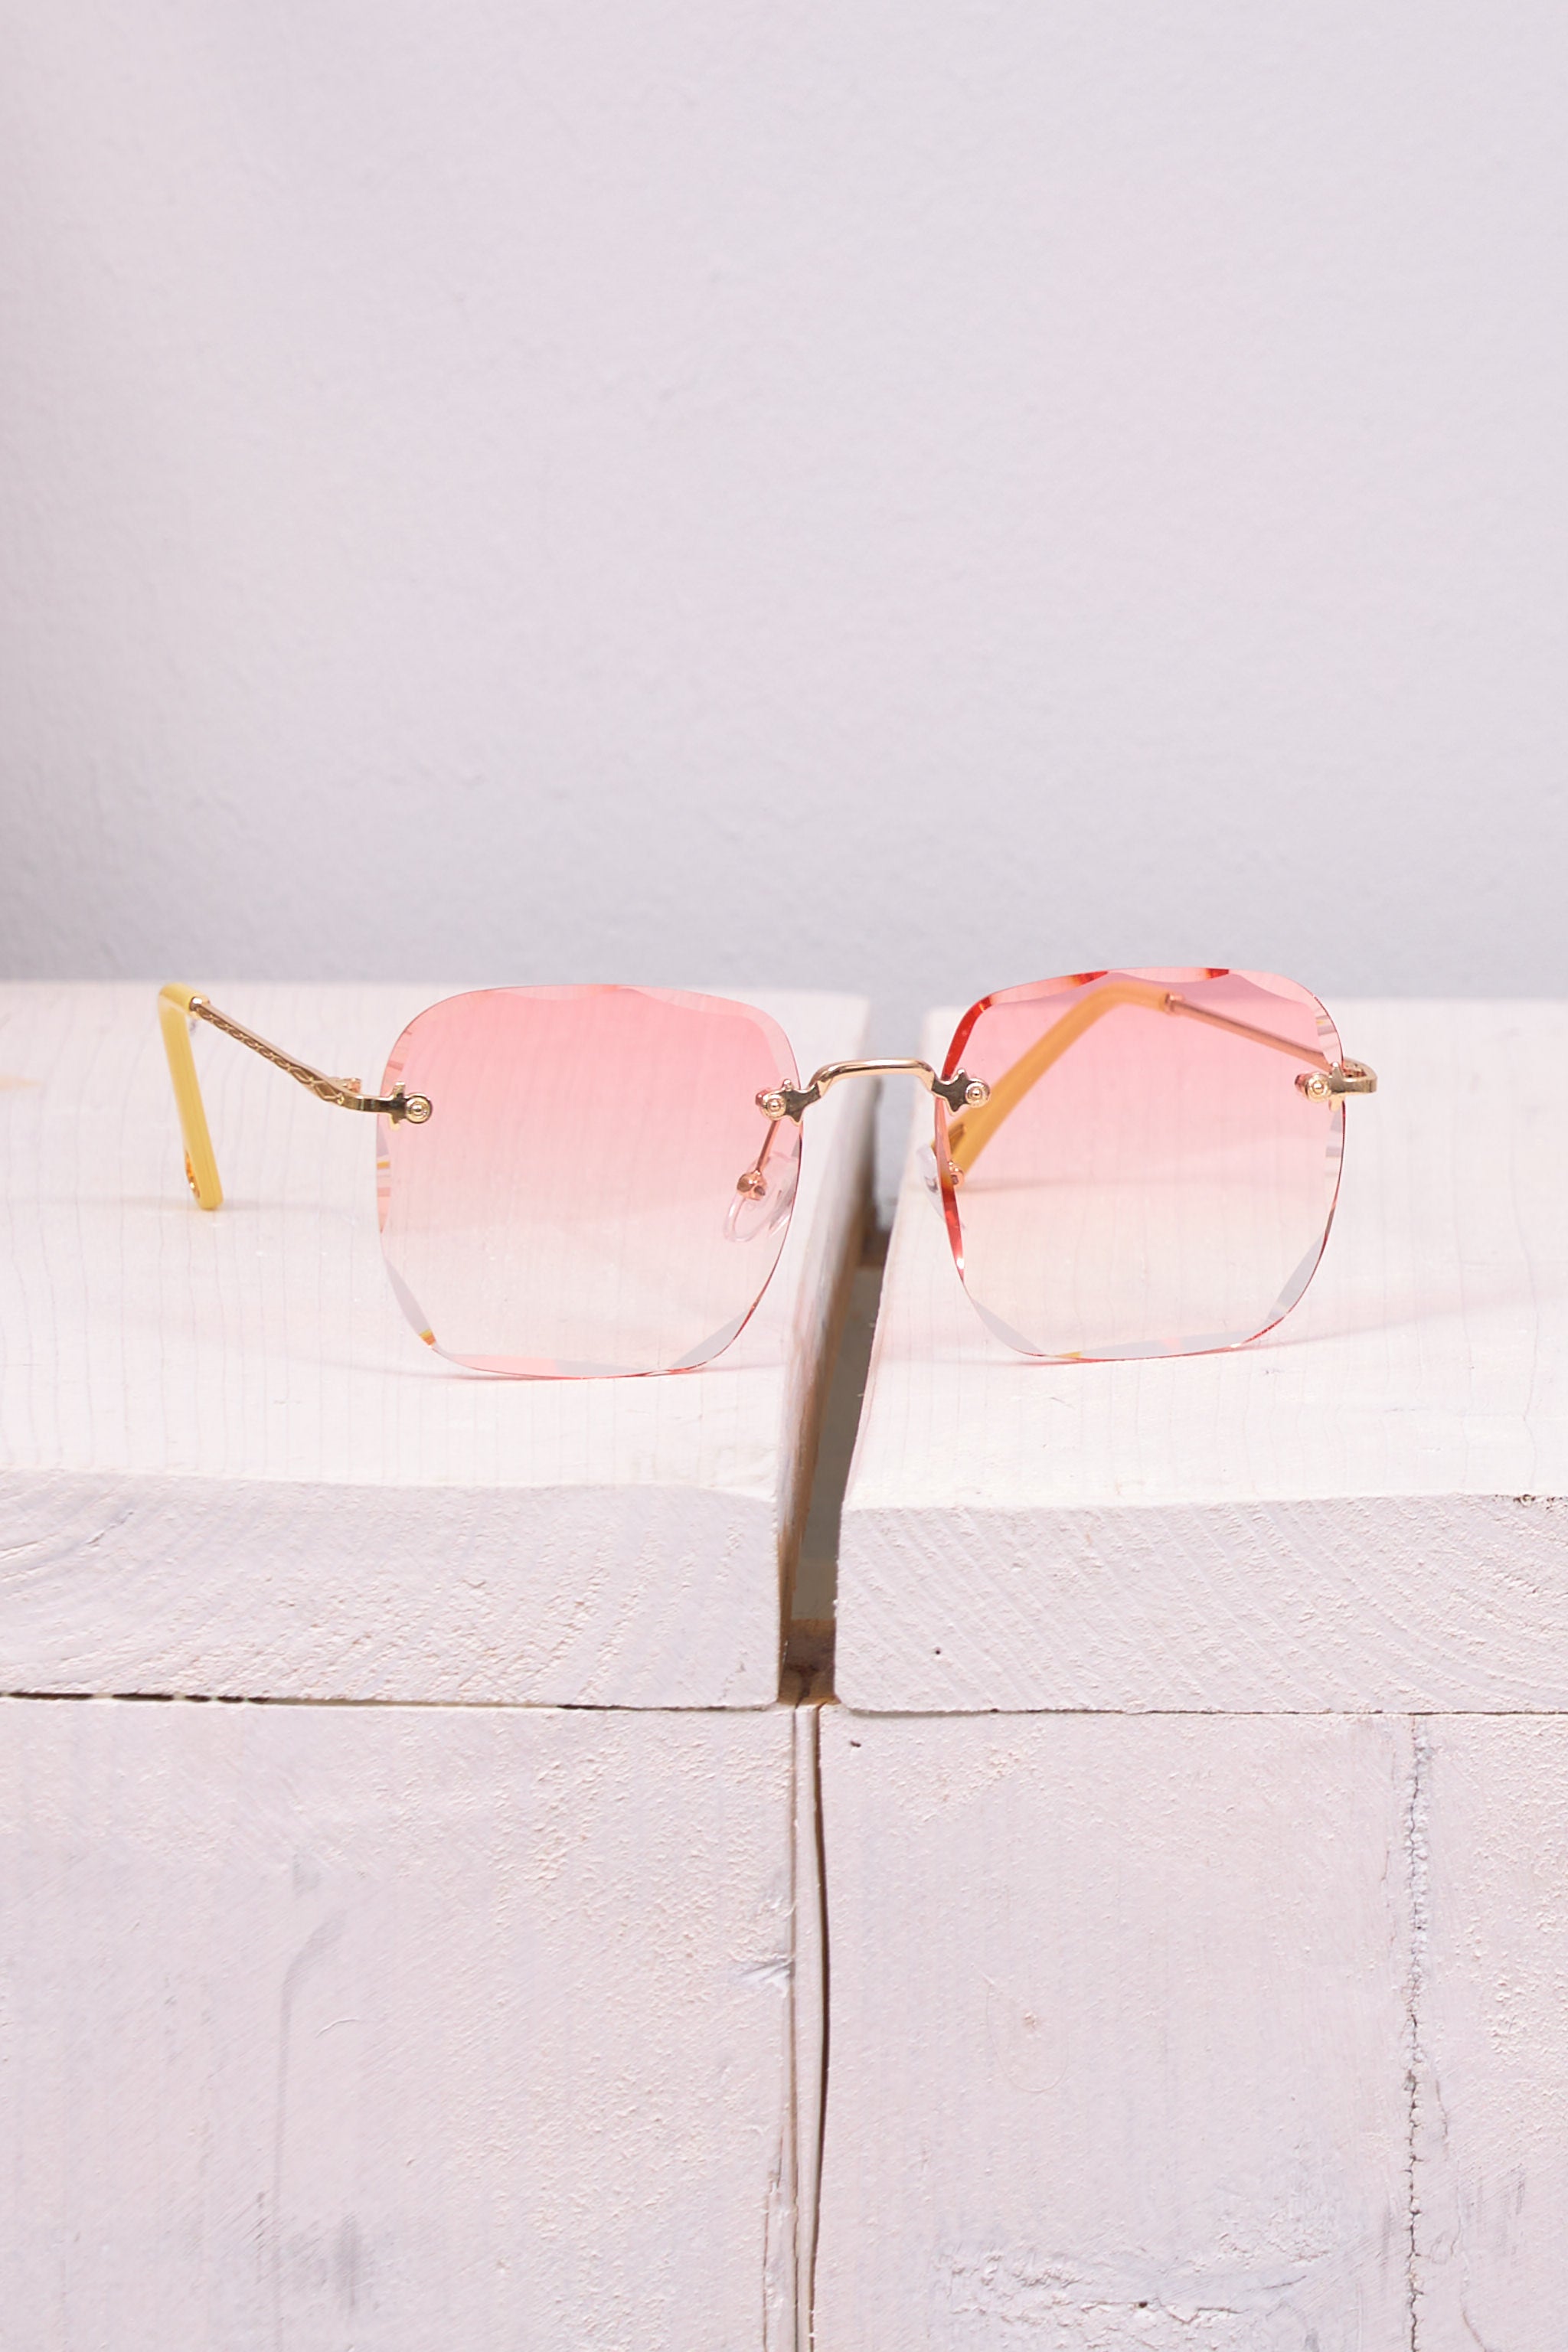 Square sunglasses, pink